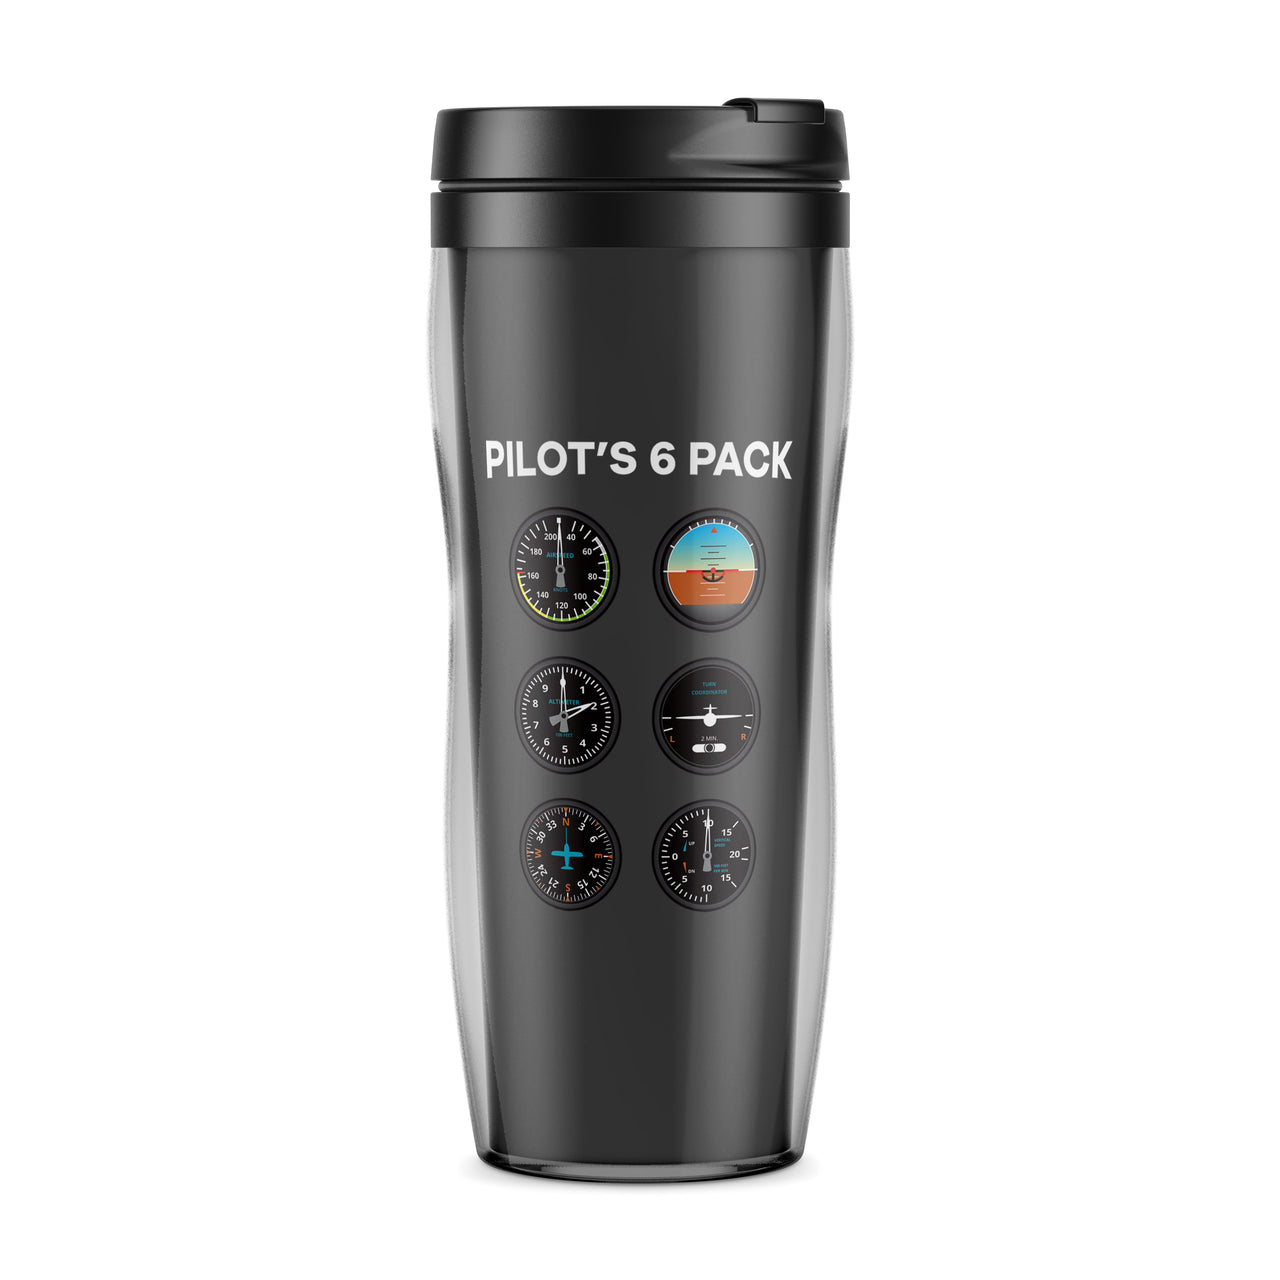 Pilot's 6 Pack Designed Travel Mugs